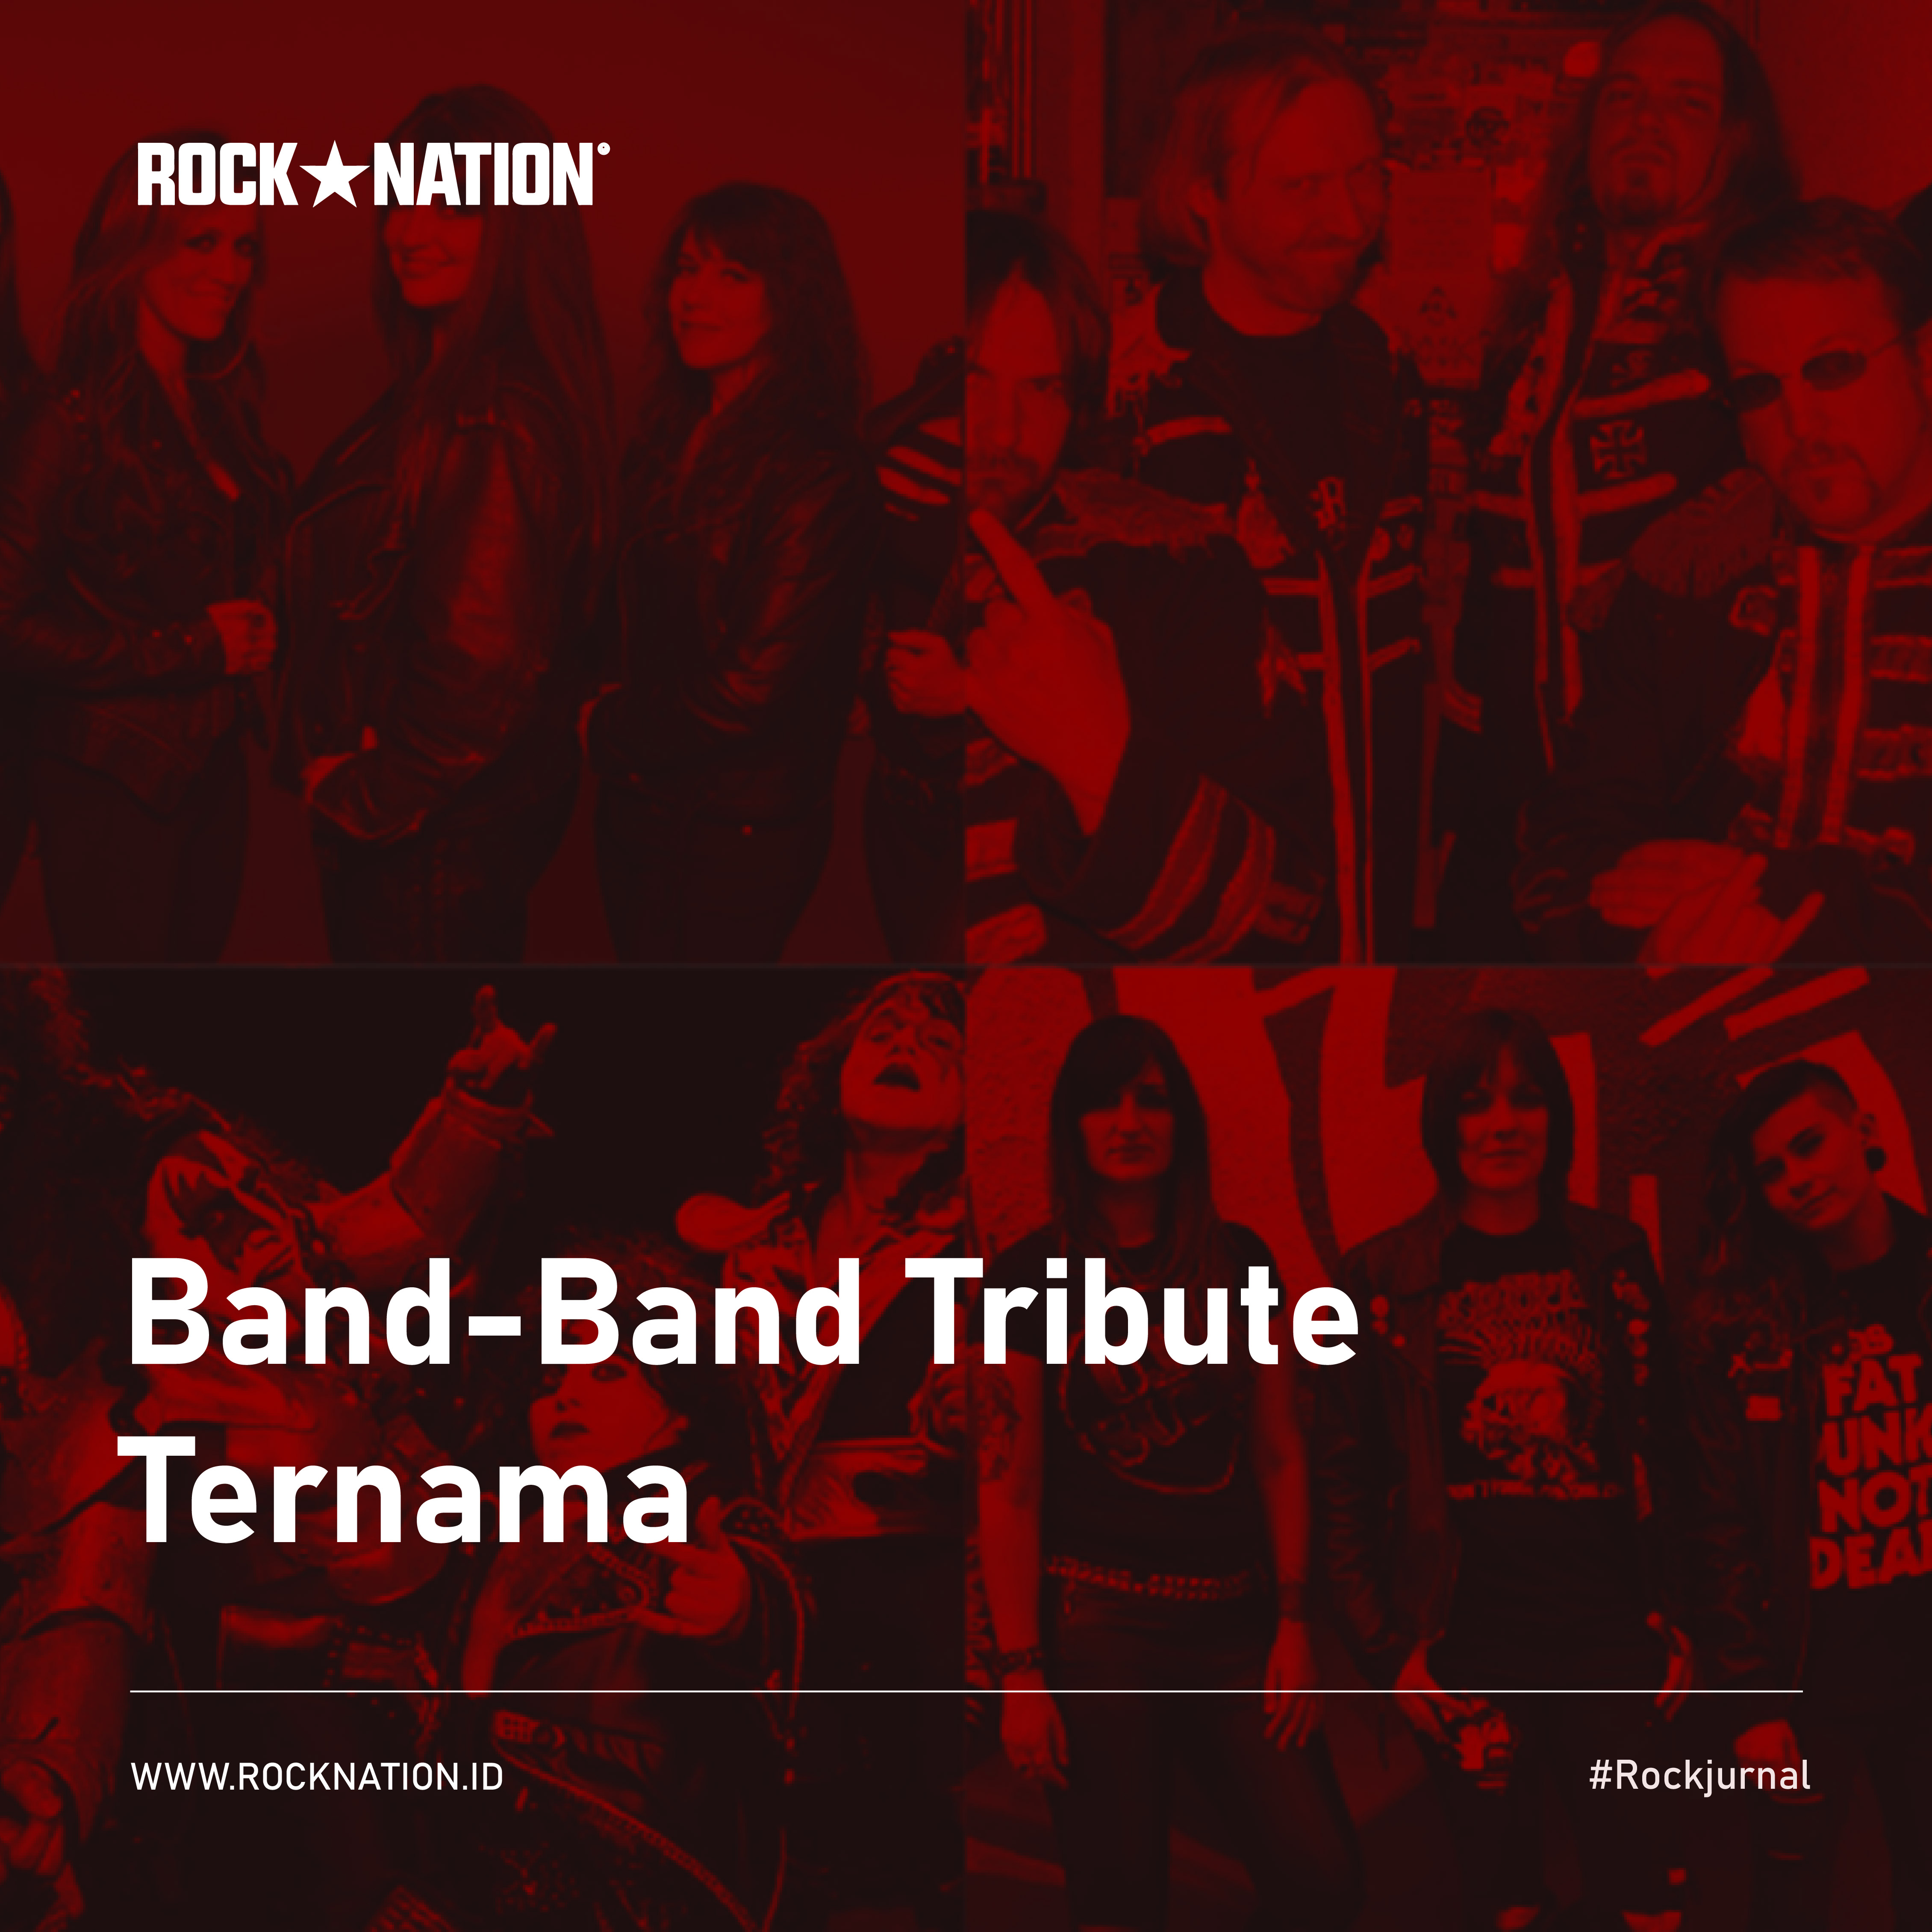 Band-Band Tribute Ternama image